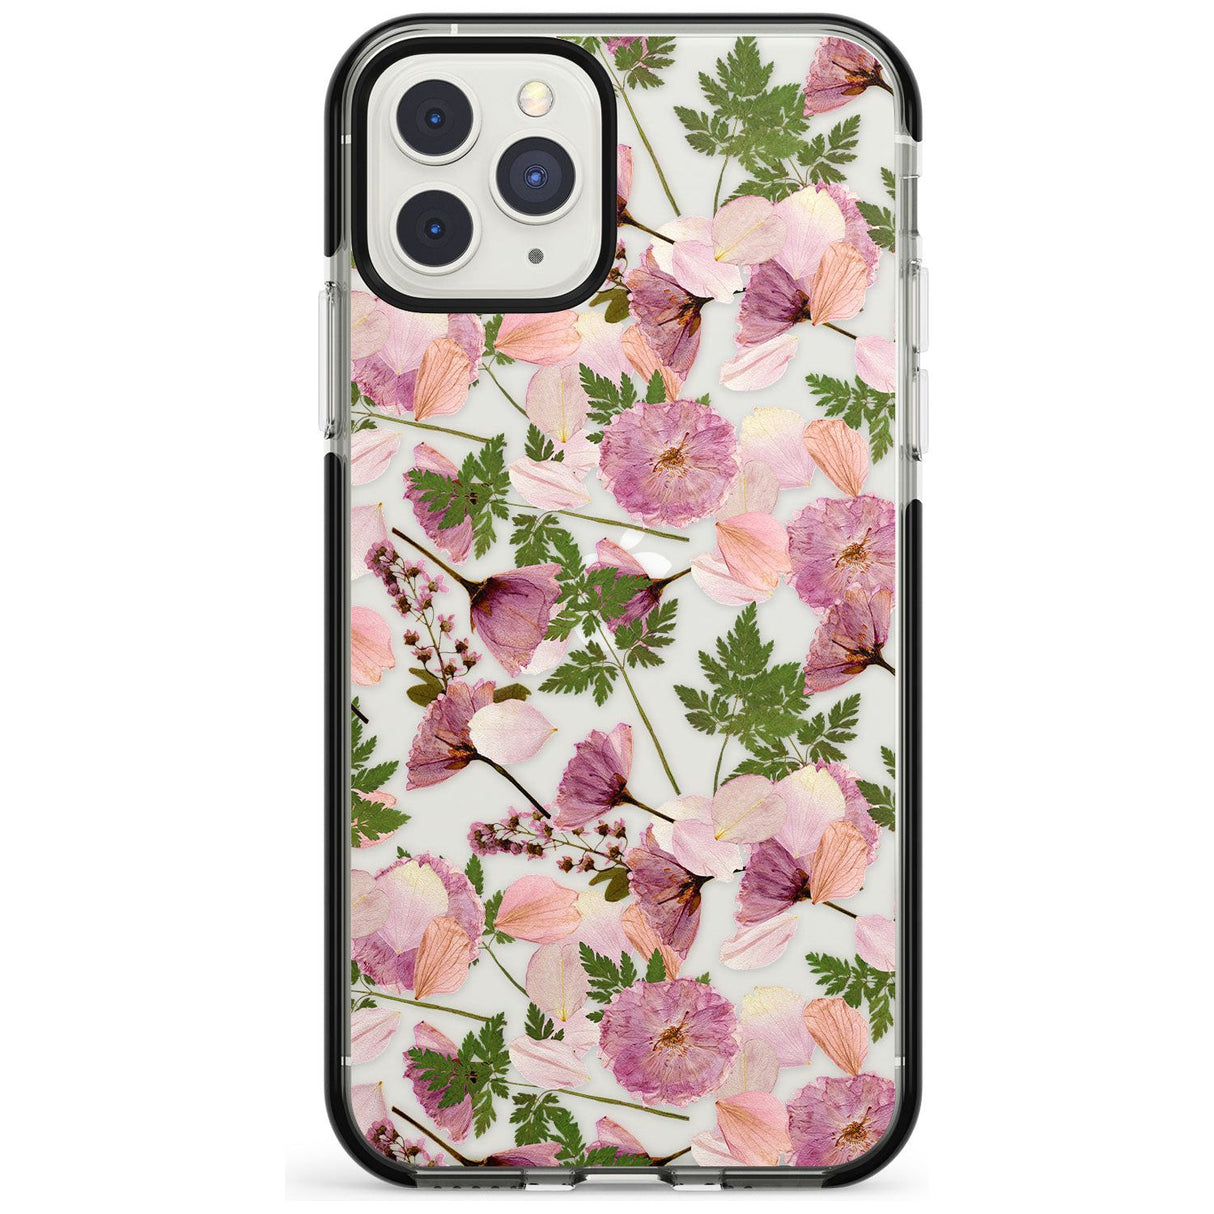 Leafy Floral Pattern Transparent Design Black Impact Phone Case for iPhone 11 Pro Max